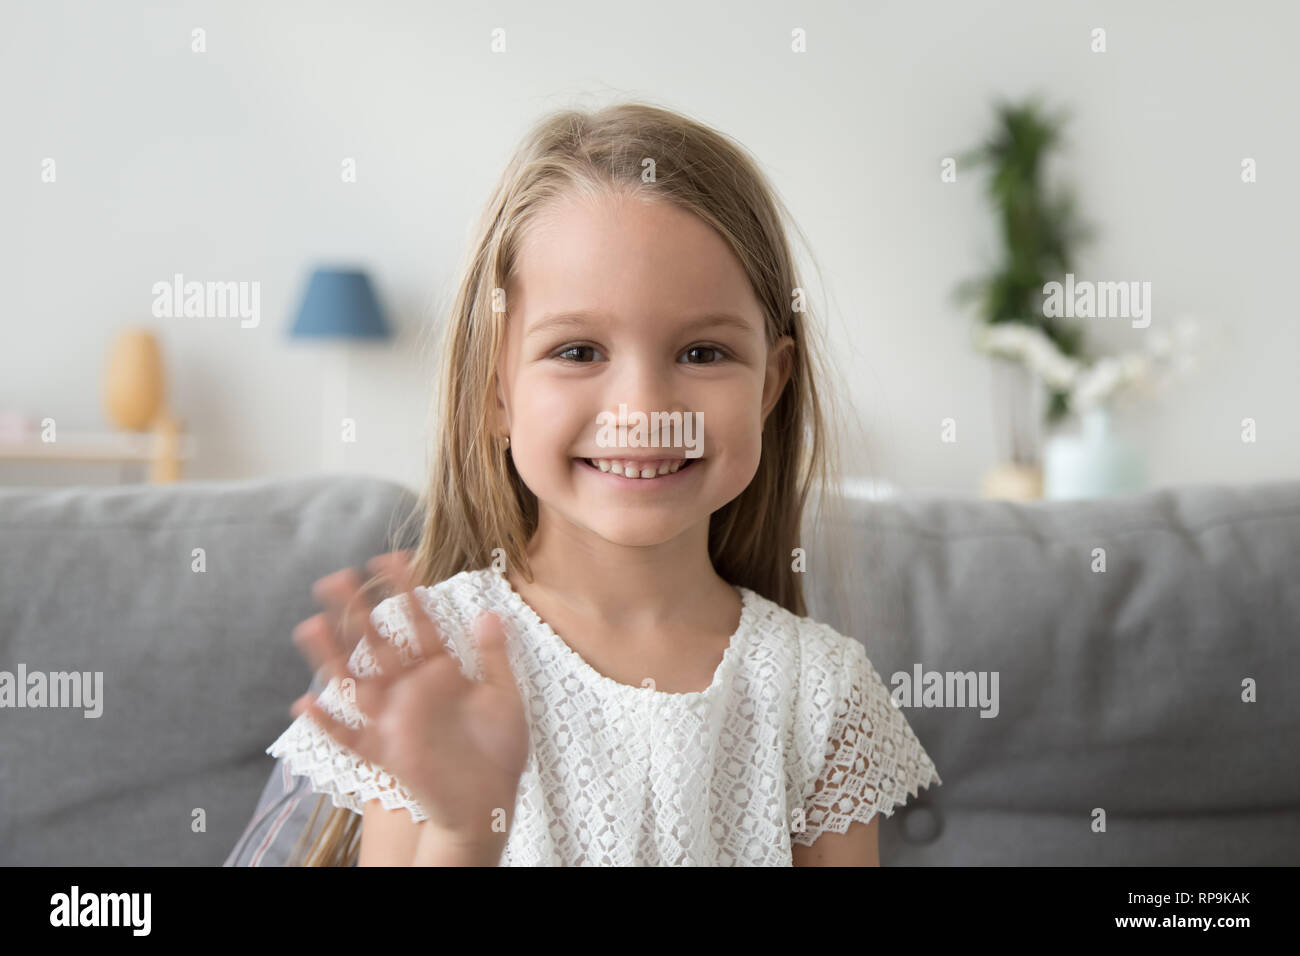 Smiling little girl looking at camera, waving hand, greeting Stock Photo